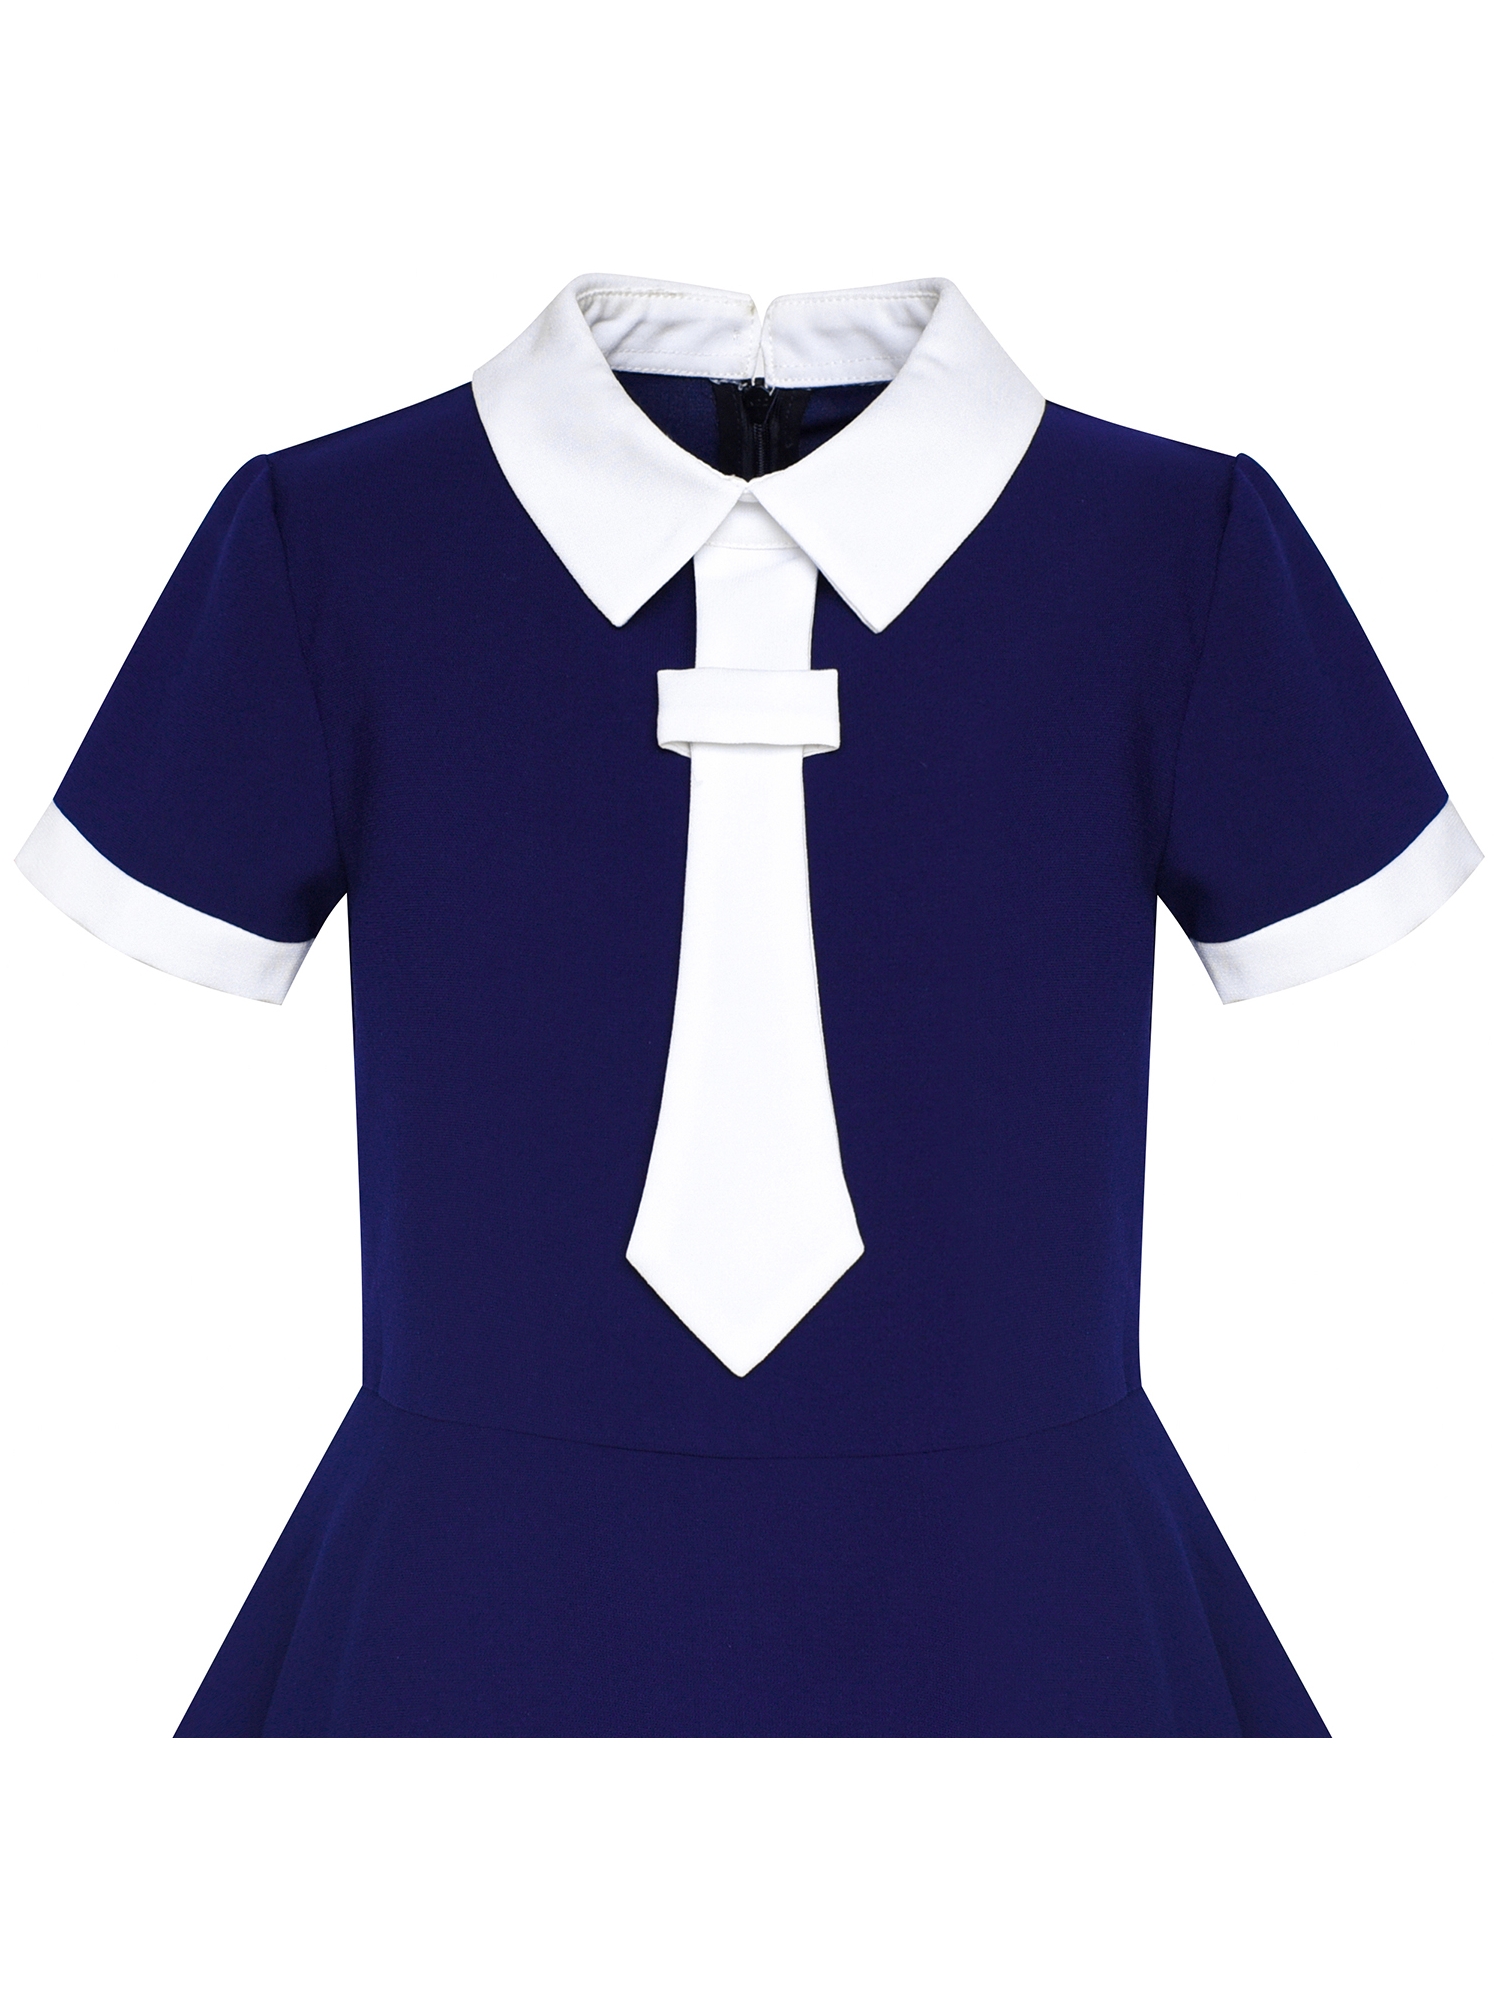 Girls Dress Back School Uniform Navy Blue White Collar Tie Short Sleeve 5 Years - image 4 of 6